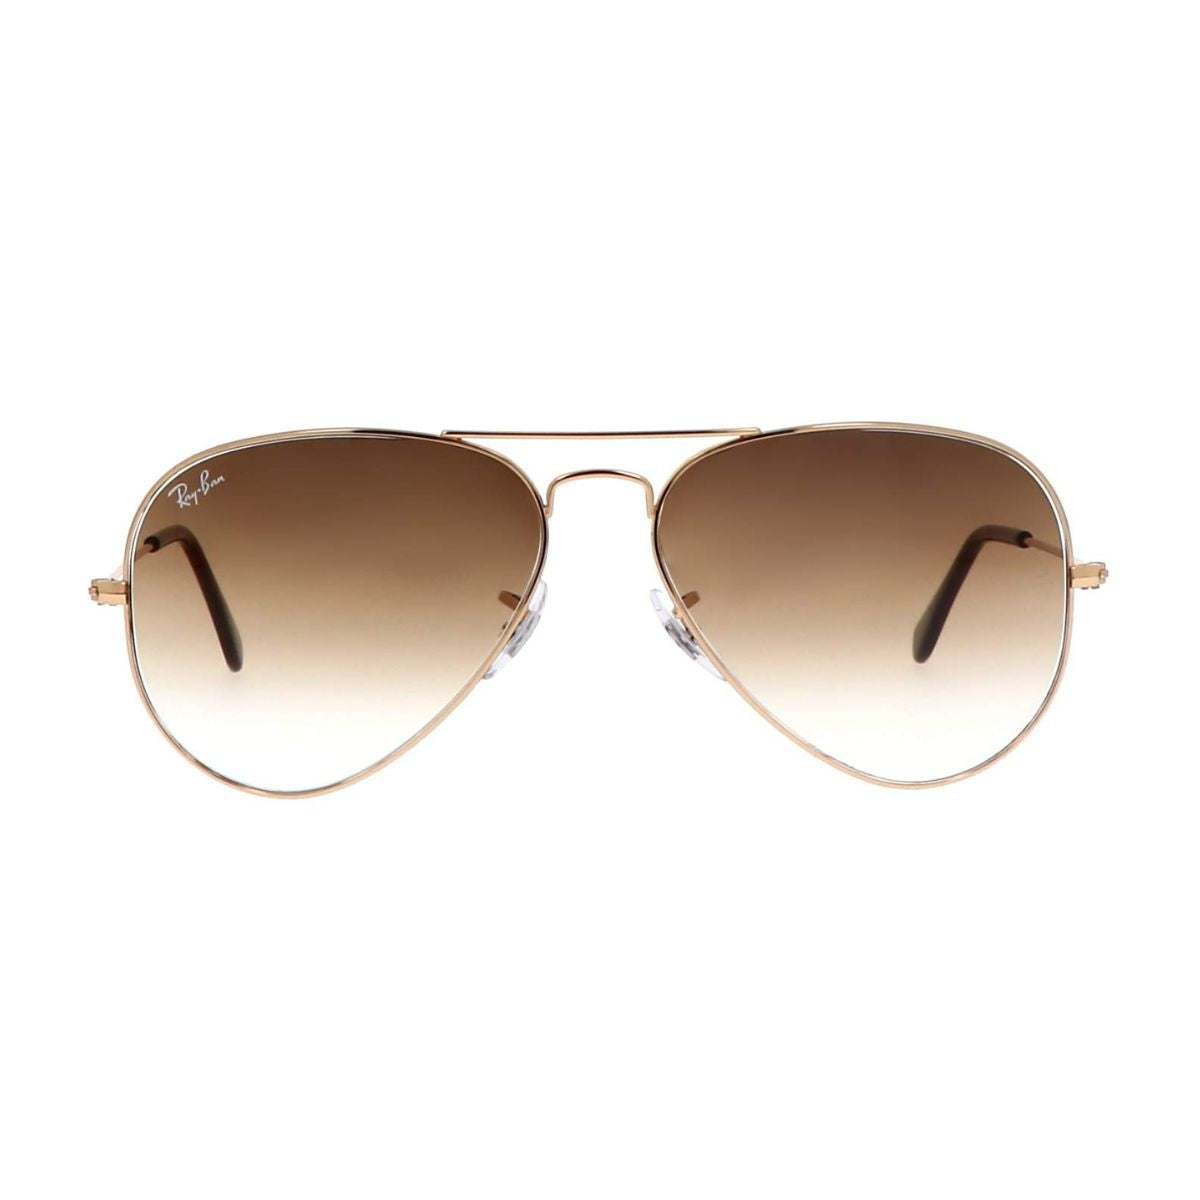 "Buy Rayban 3025 001/51 Trendy Eyewear Sunglasses For Men's At Optorium"